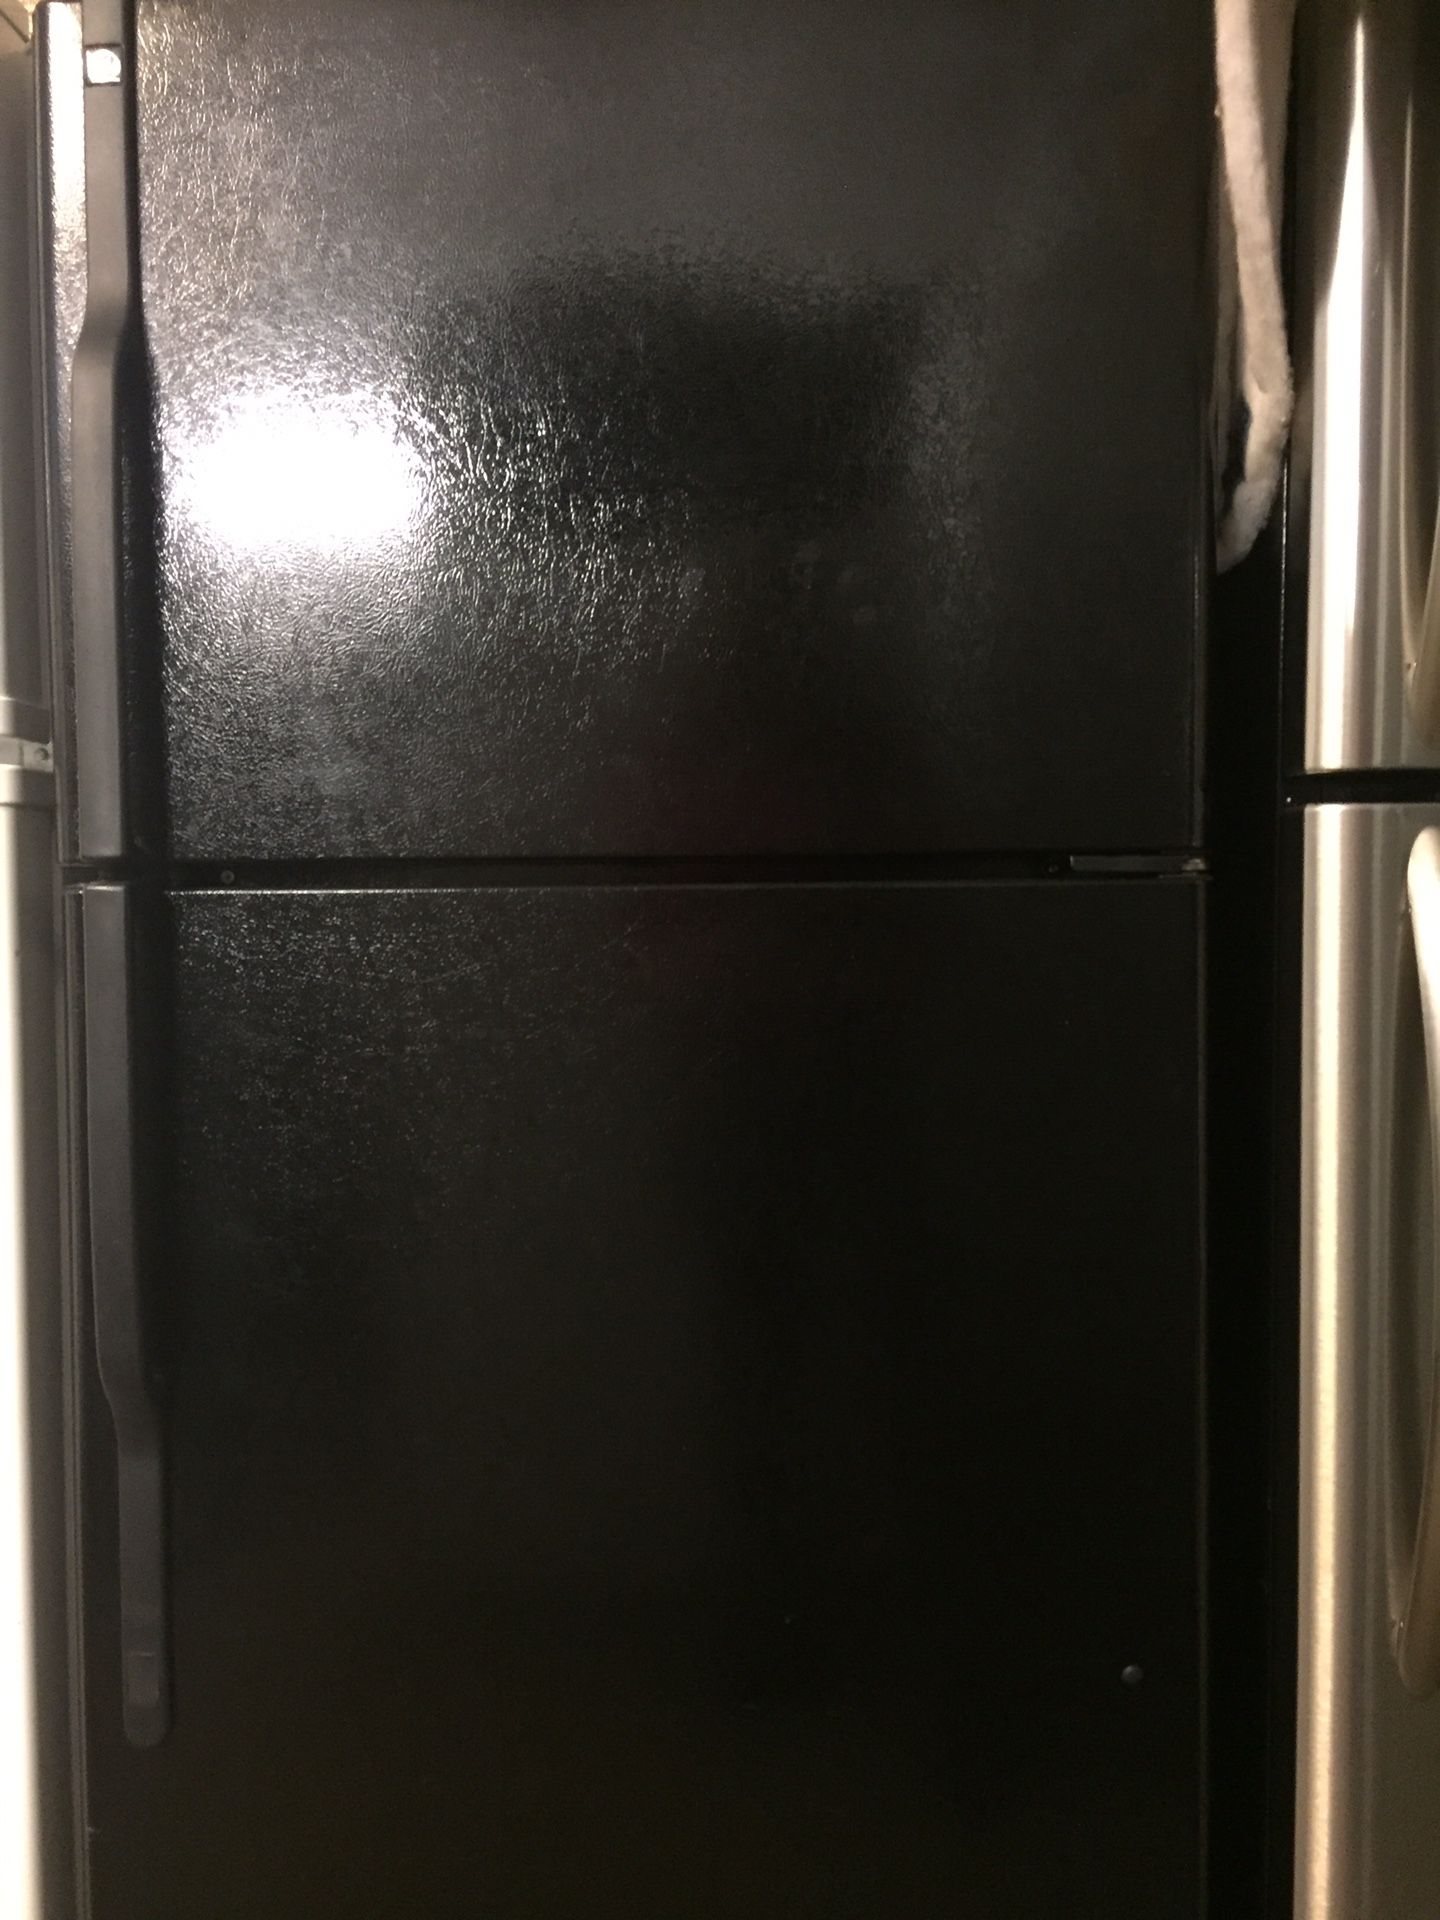 Top freezer black refrigerator